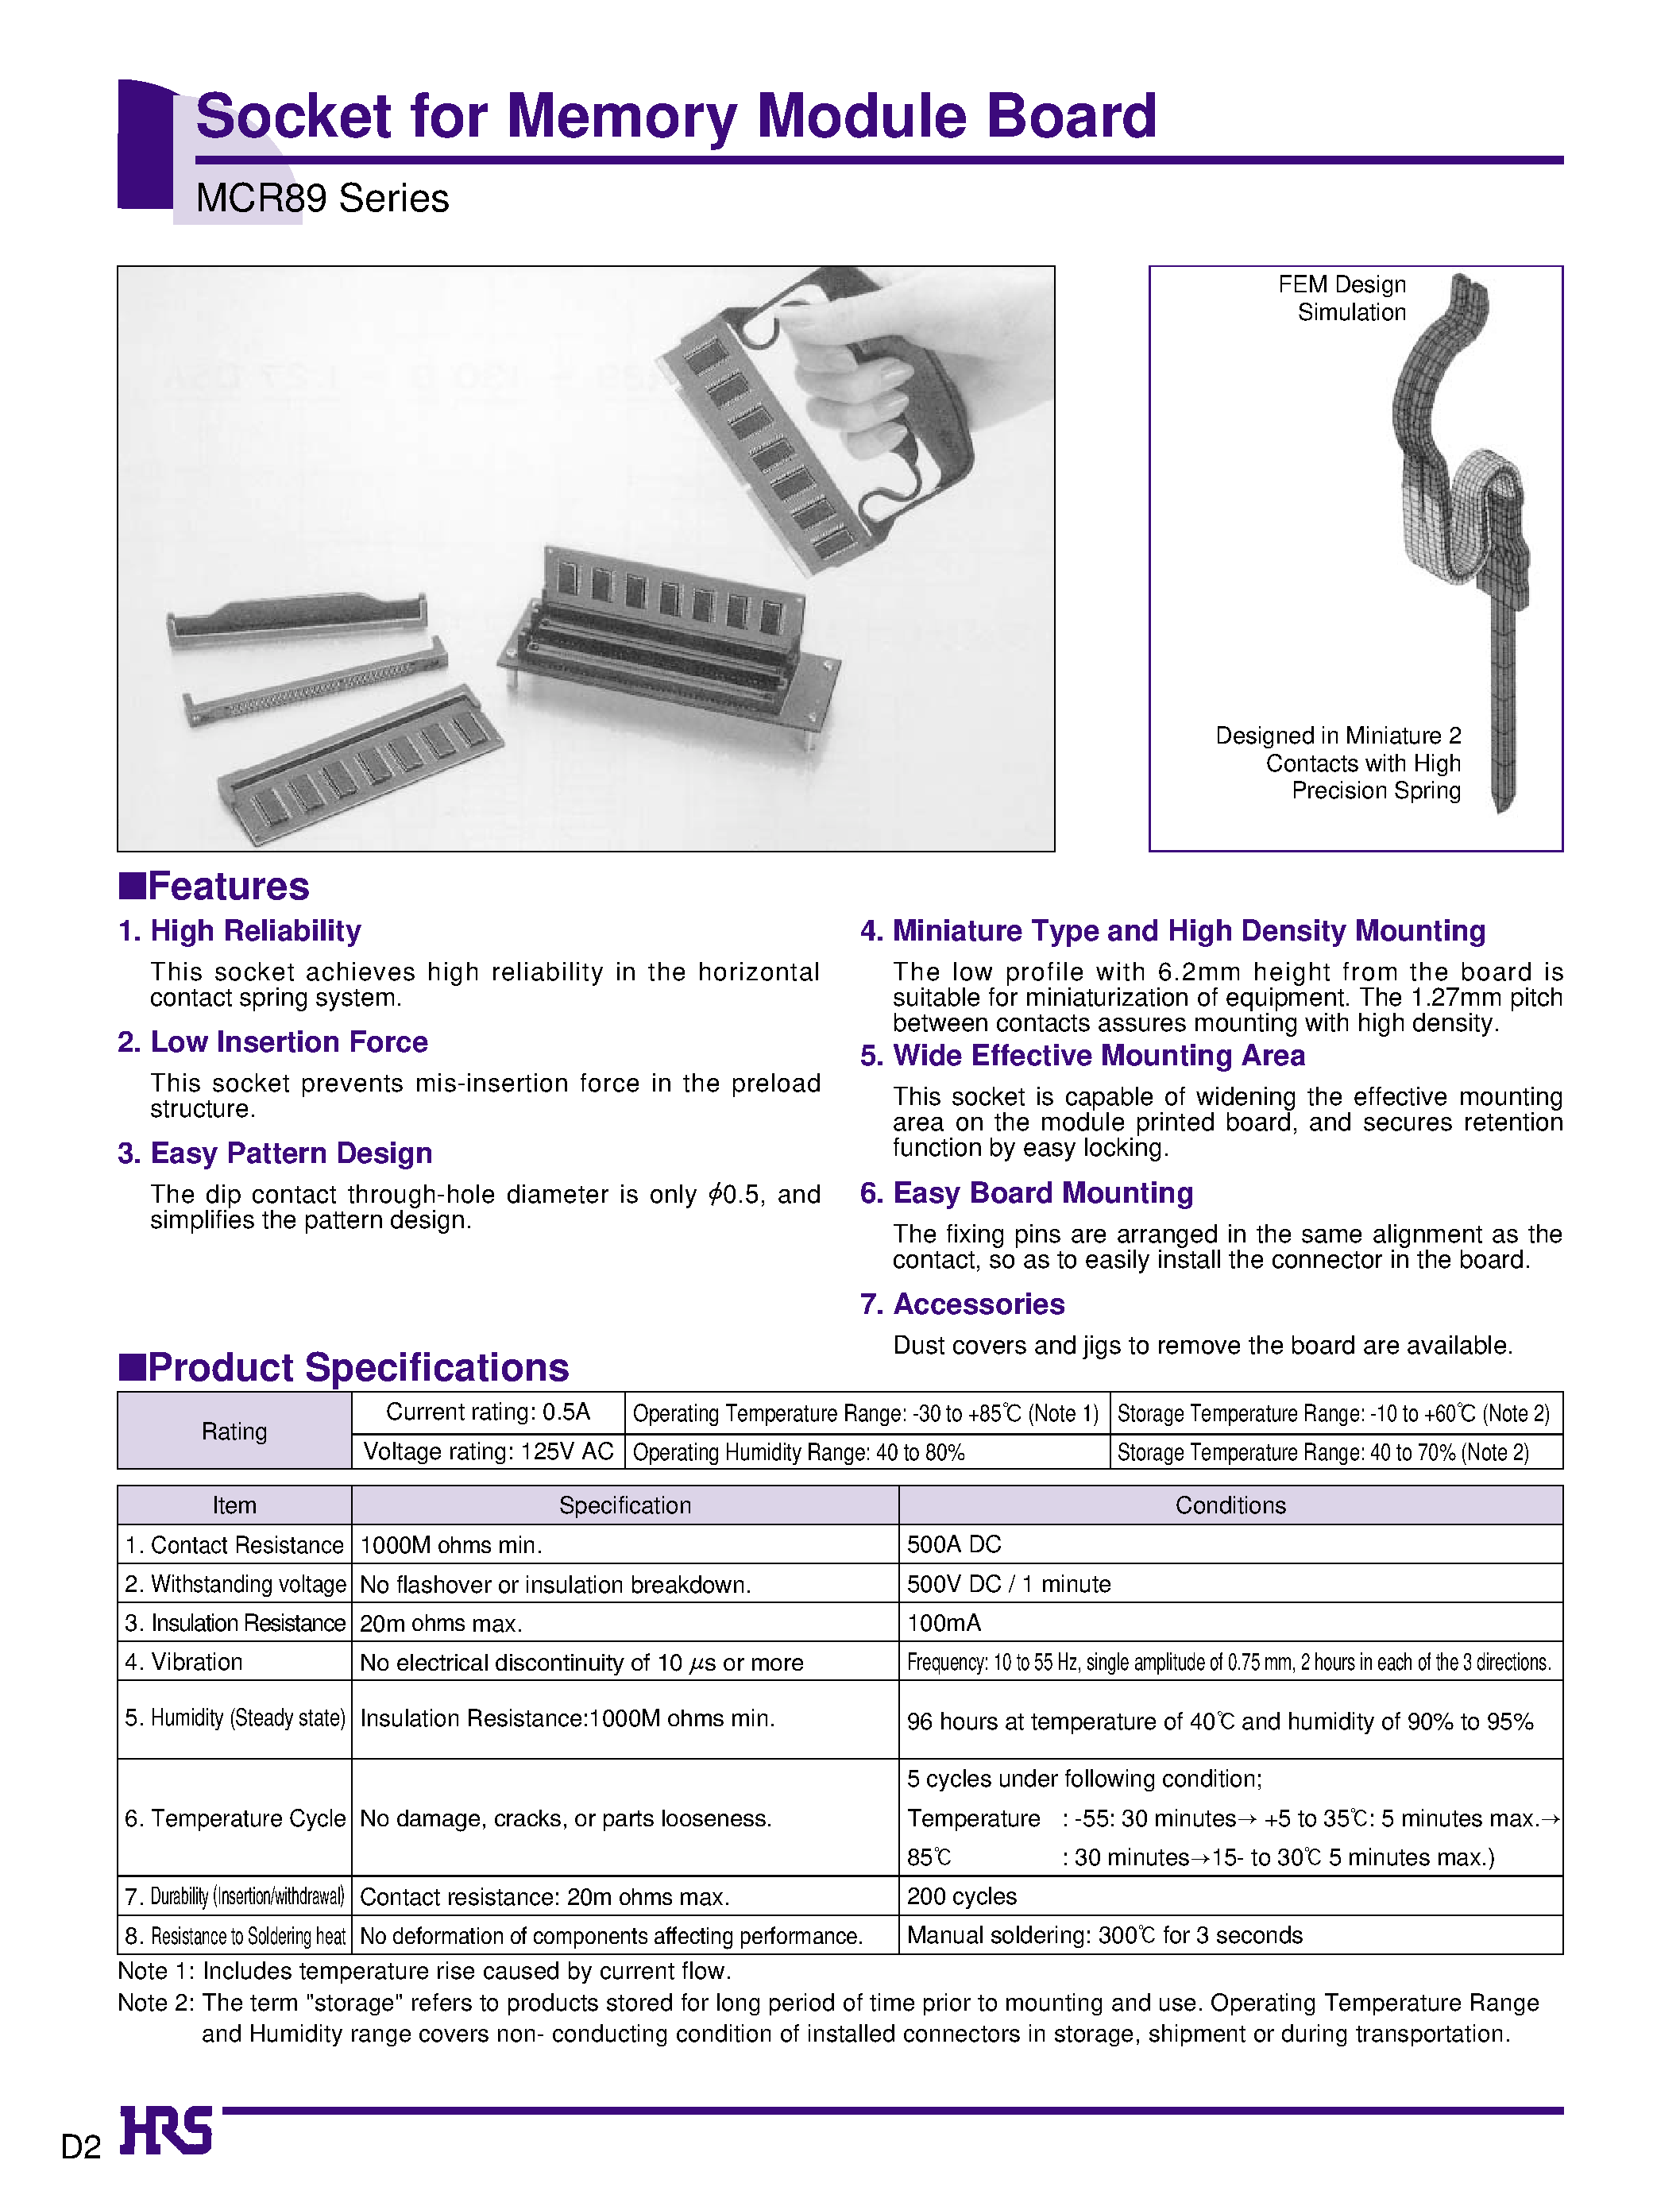 Даташит MCR89-130D-EJ - Socket for Memory Module Board страница 1